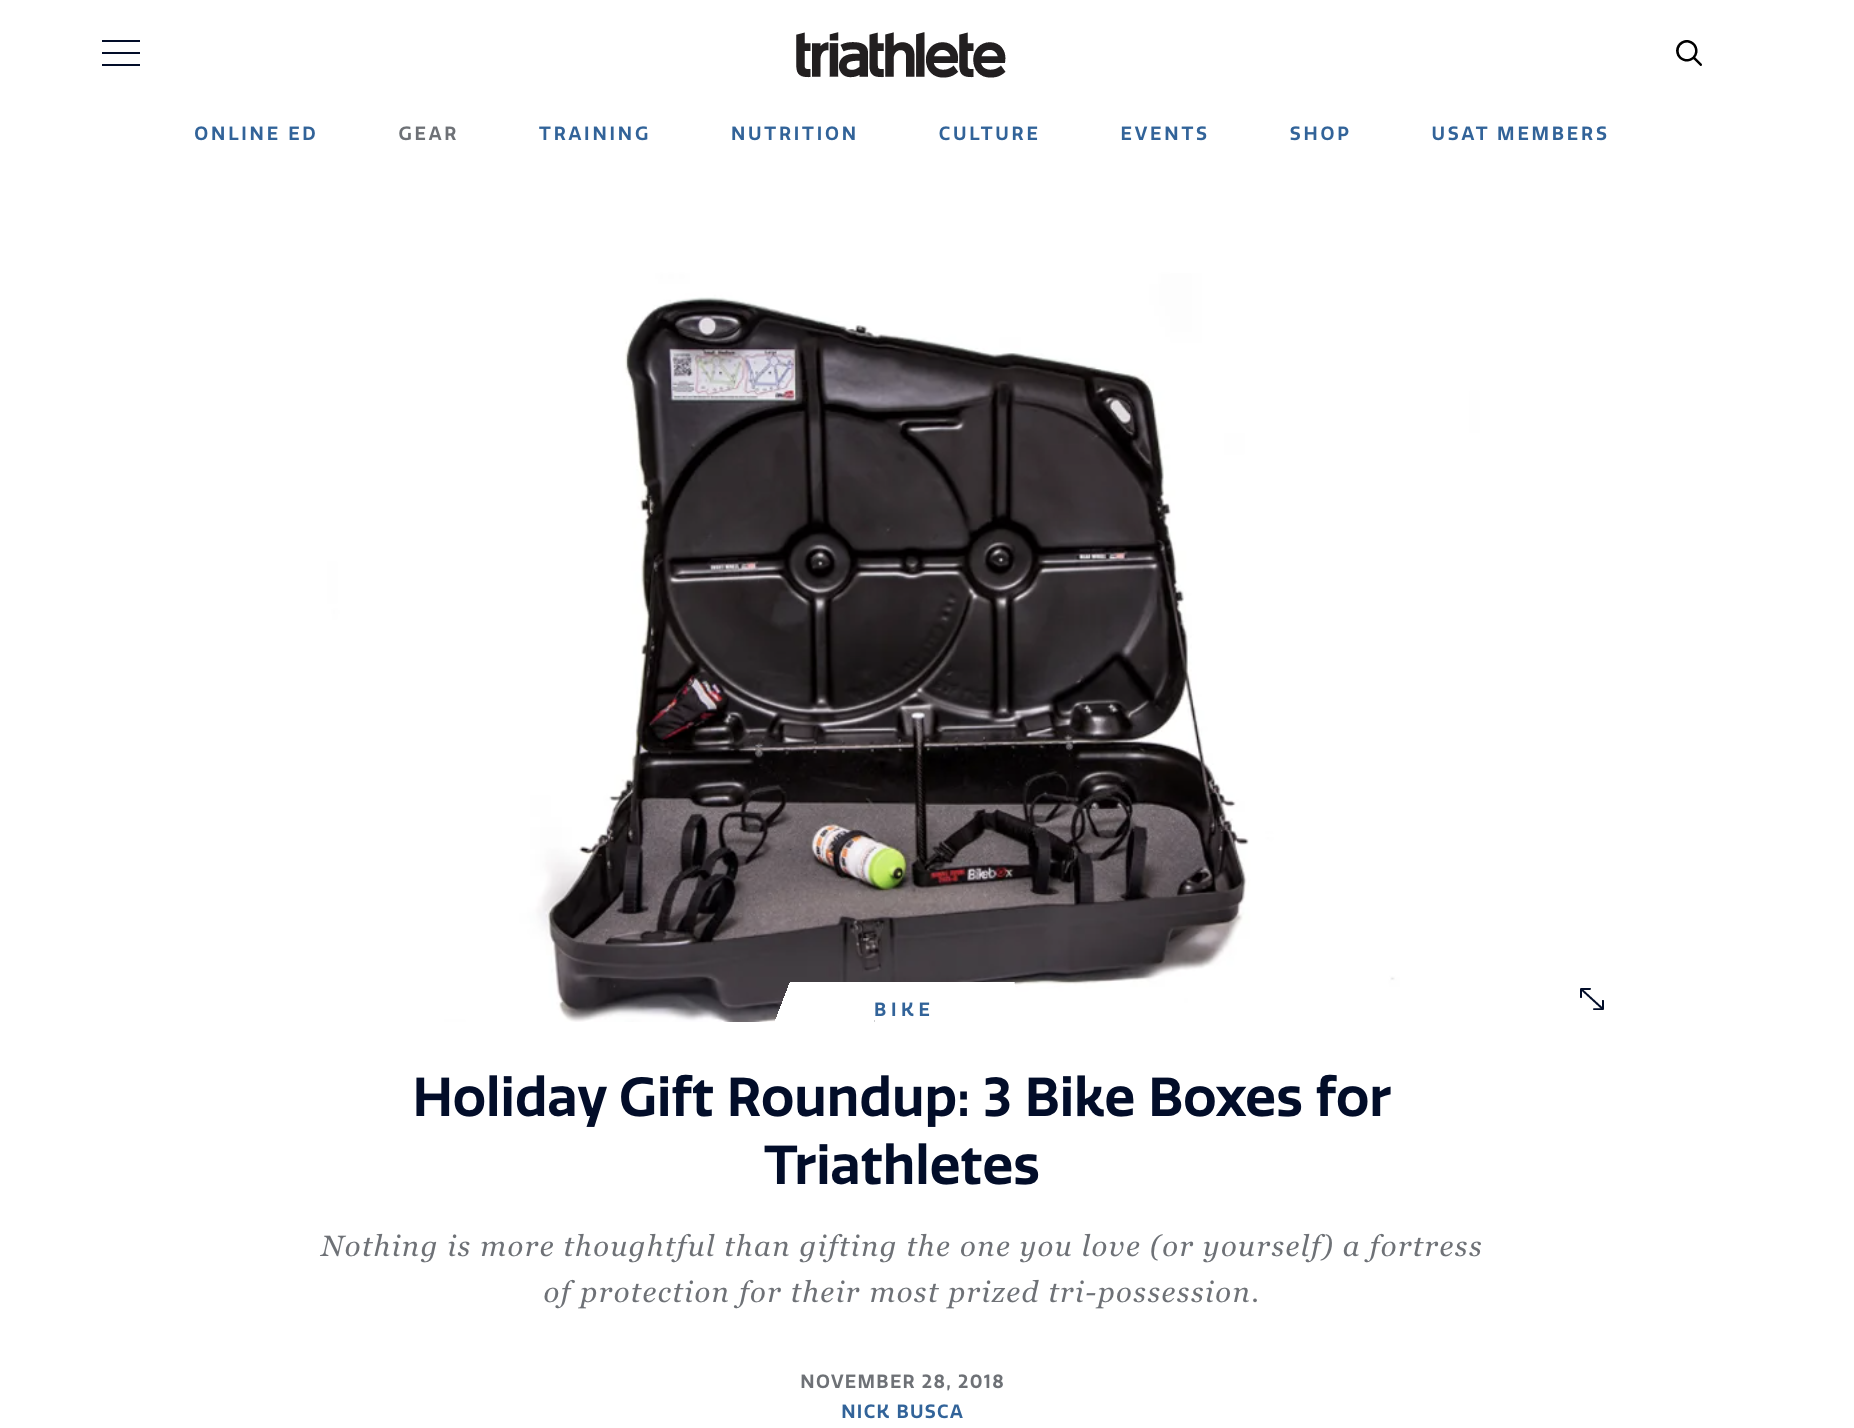 Holiday Gift Roundup: 3 Bike Boxes for Triathletes